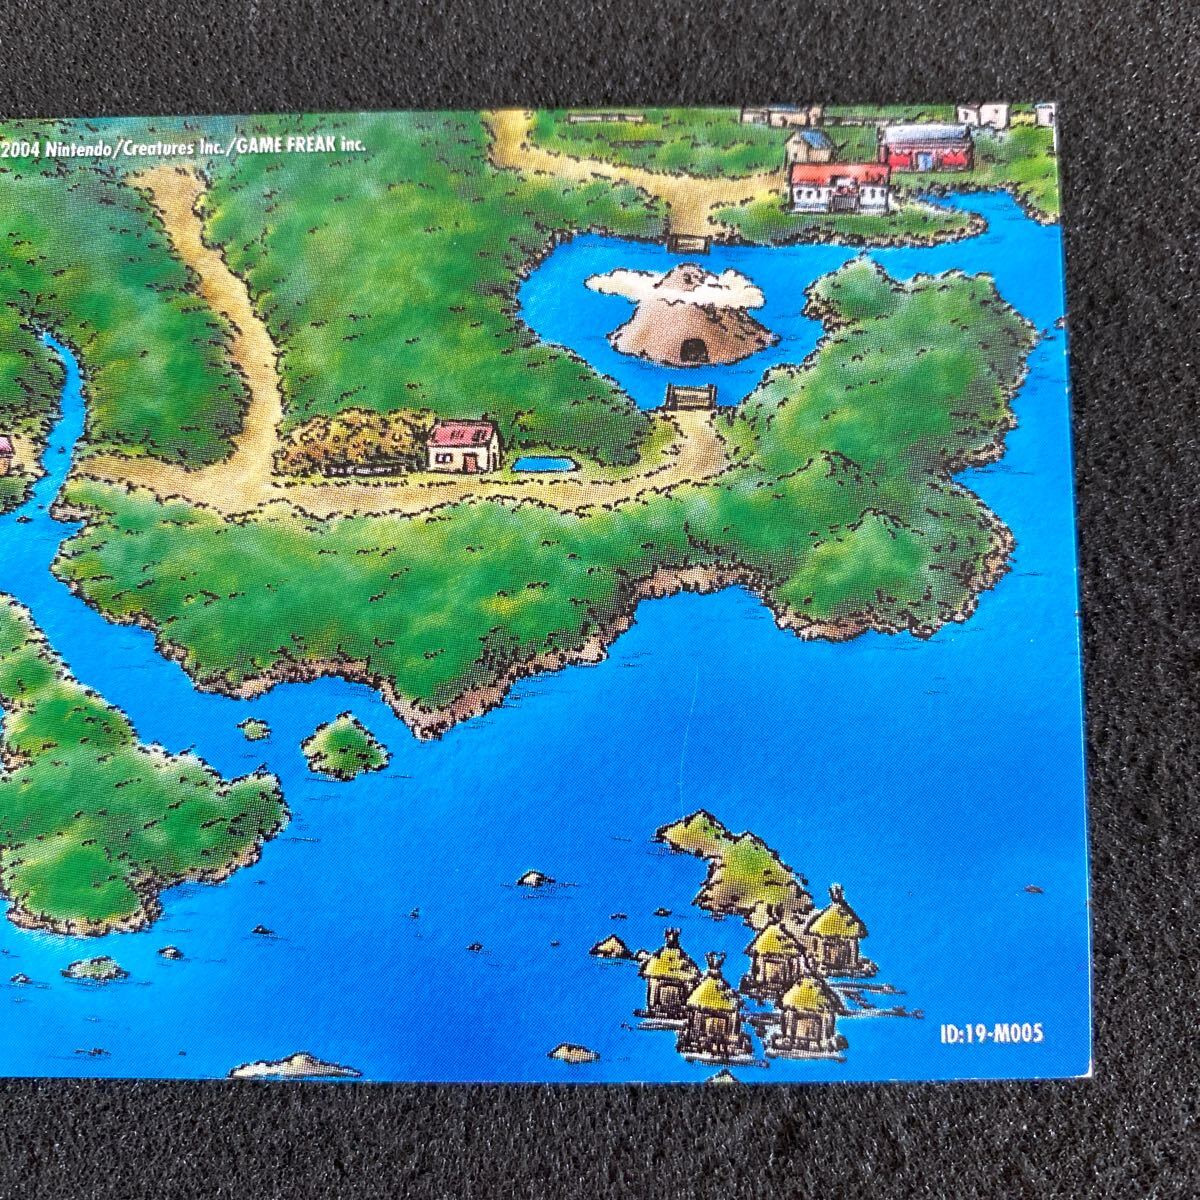  Pokemon Battle Card e + emerald map card M005 nintendo game GBA Pocket Monster anime Carddas average on goods 